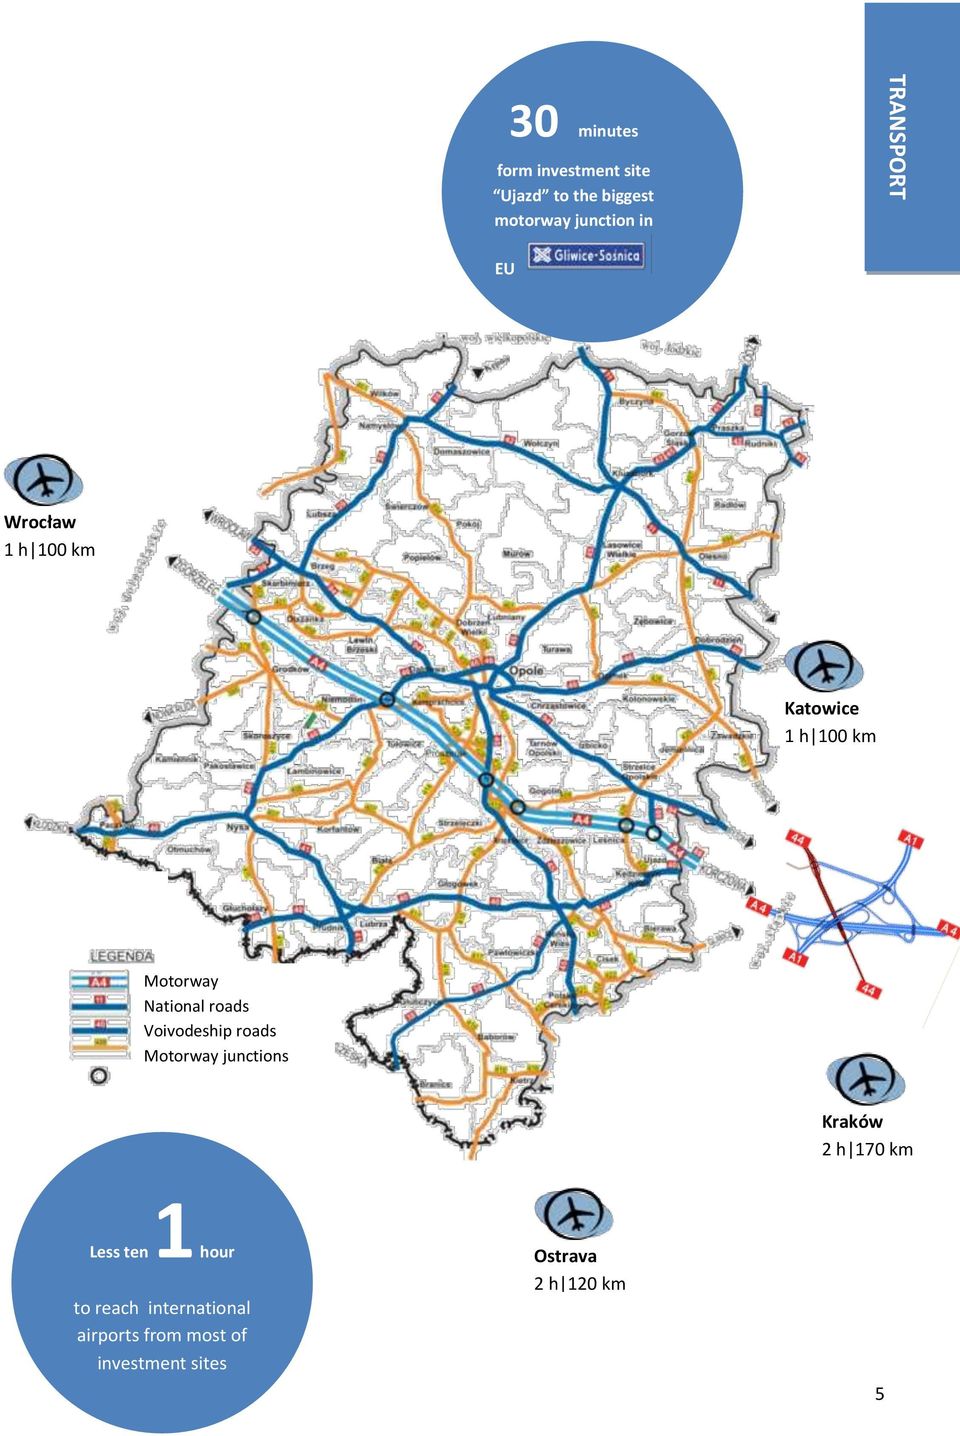 roads Voivodeship roads Motorway junctions 1 Less ten hour to reach